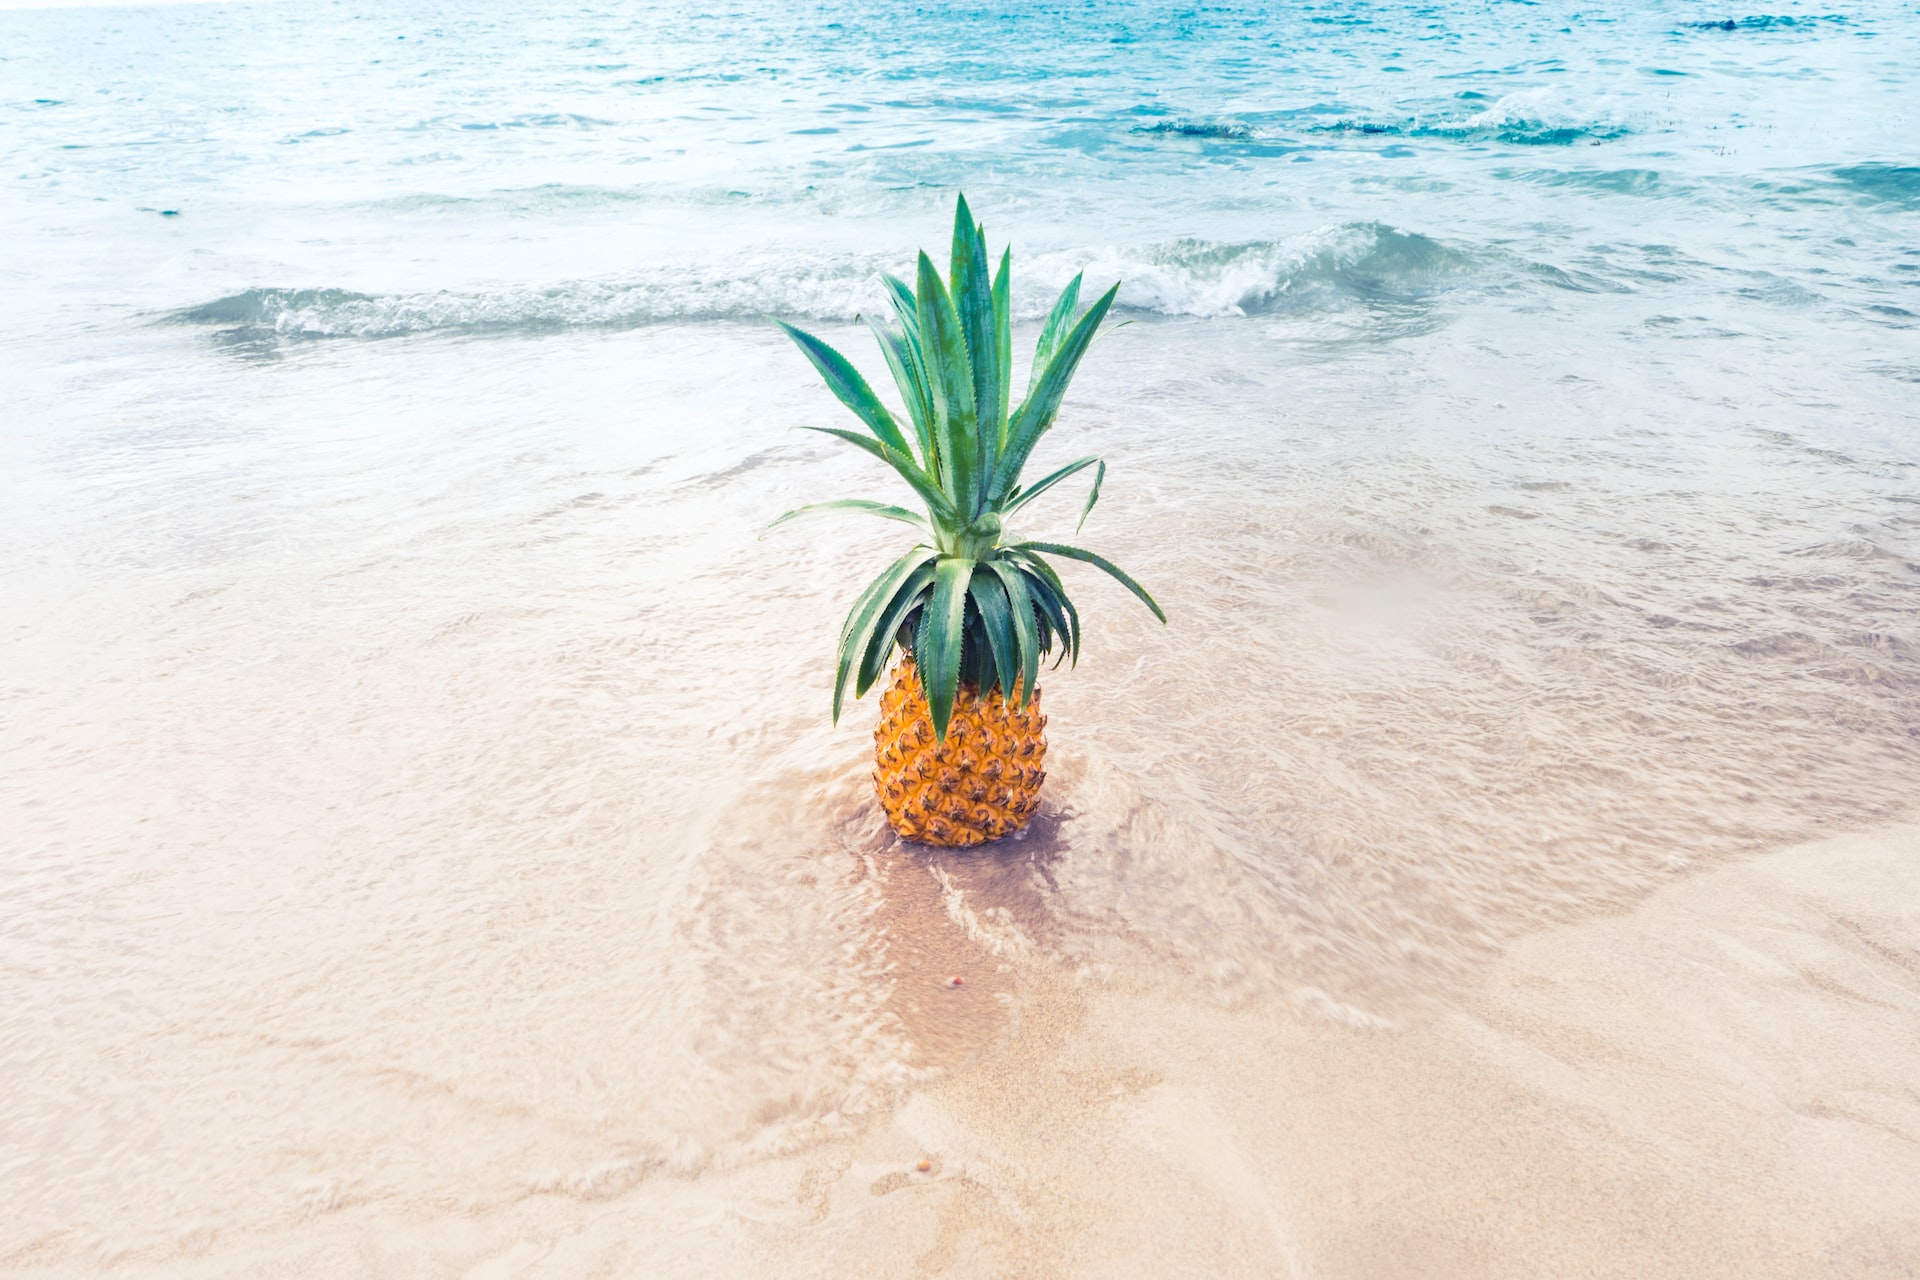 Pineapple on the beach (photo: Evi Radauscher)